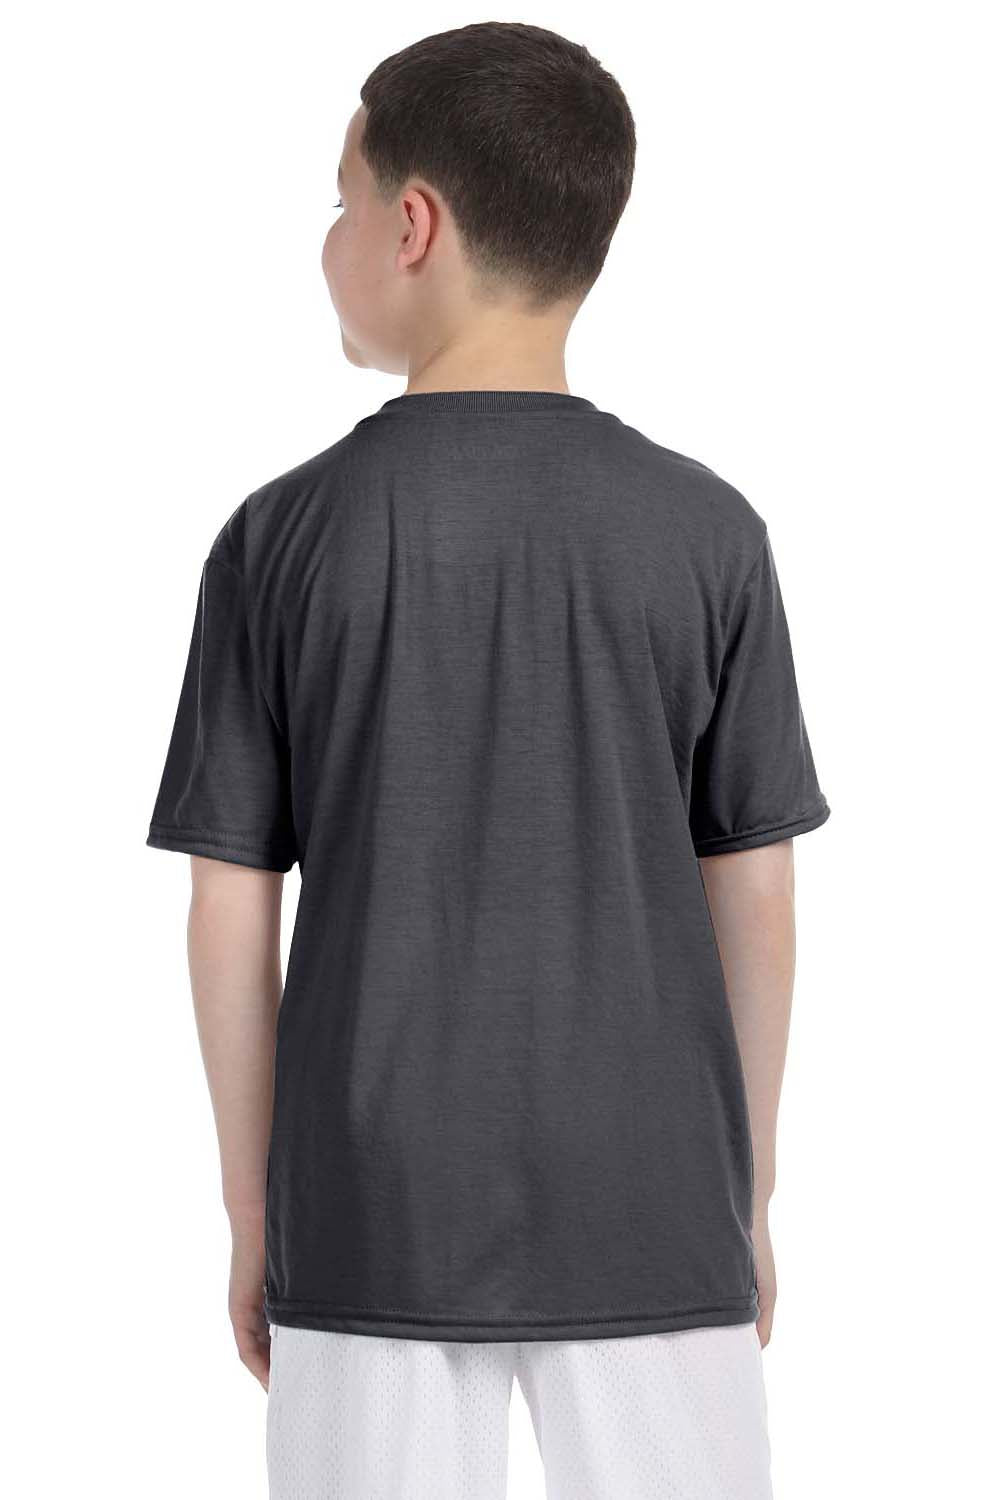 Gildan G420B Youth Performance Jersey Moisture Wicking Short Sleeve Crewneck T-Shirt Charcoal Grey Back